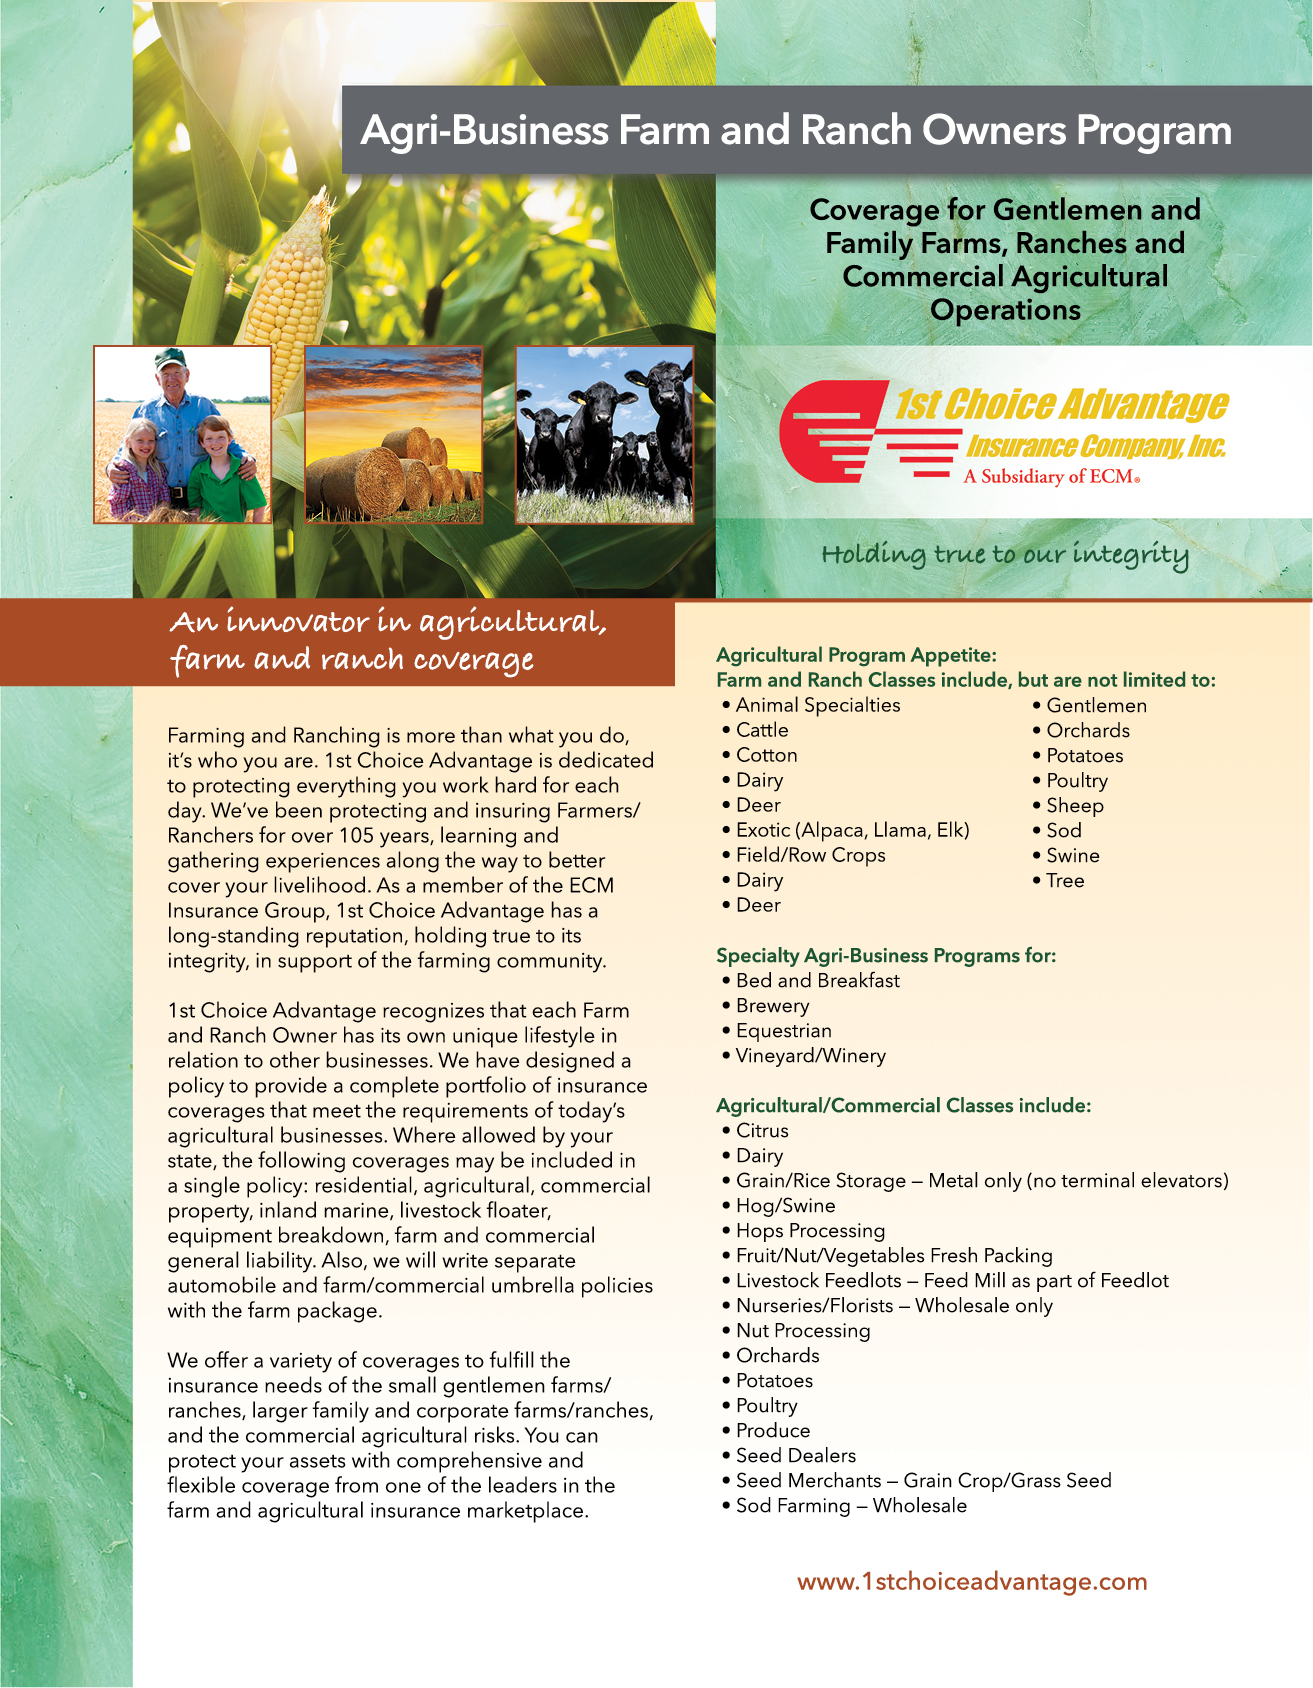 Agri-Business Farm and Ranch brochure